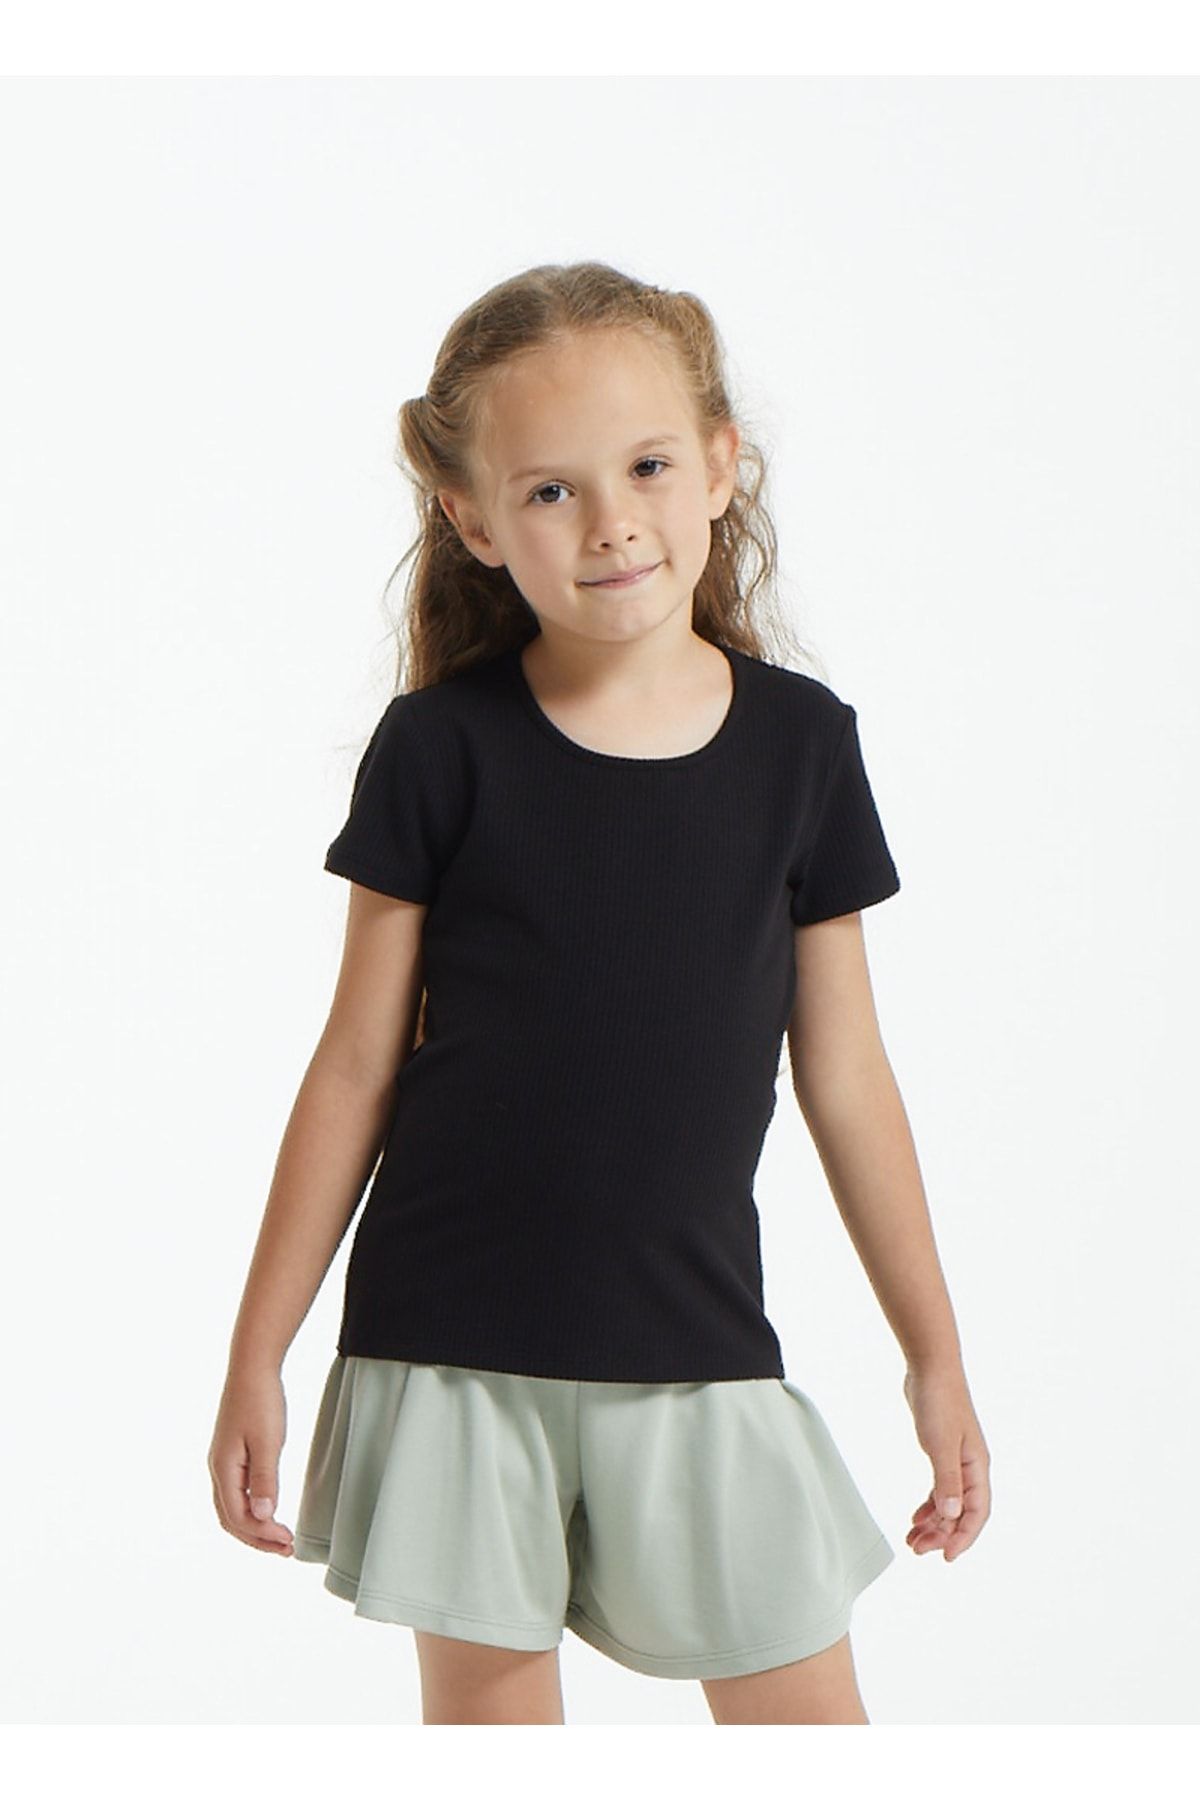 Blackspade Kız Çocuk Tshirt 60121 - Siyah